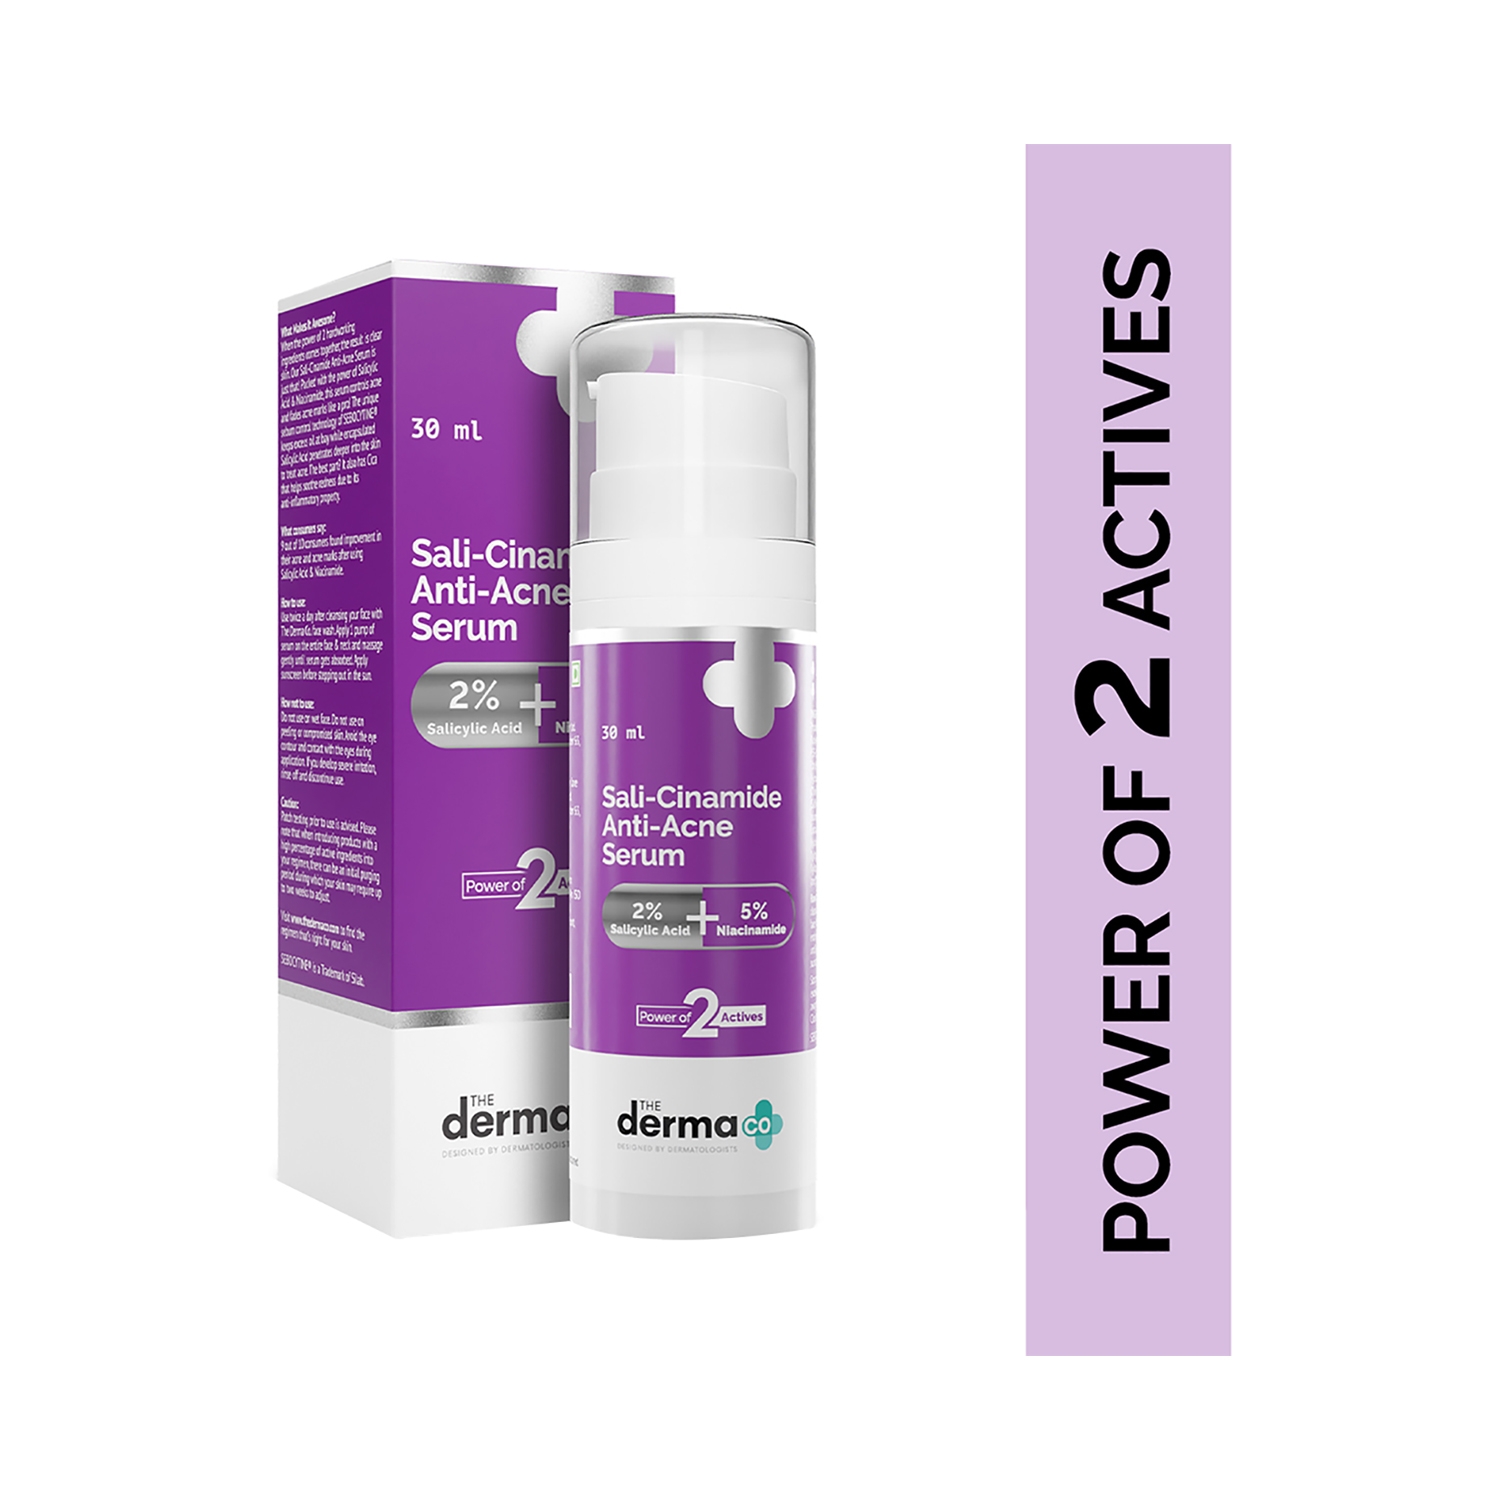 The Derma Co | The Derma Co. Sali-Cinamide Anti-Acne Face Serum With 2% Salicylic Acid & 5% Niacinamide (30ml)